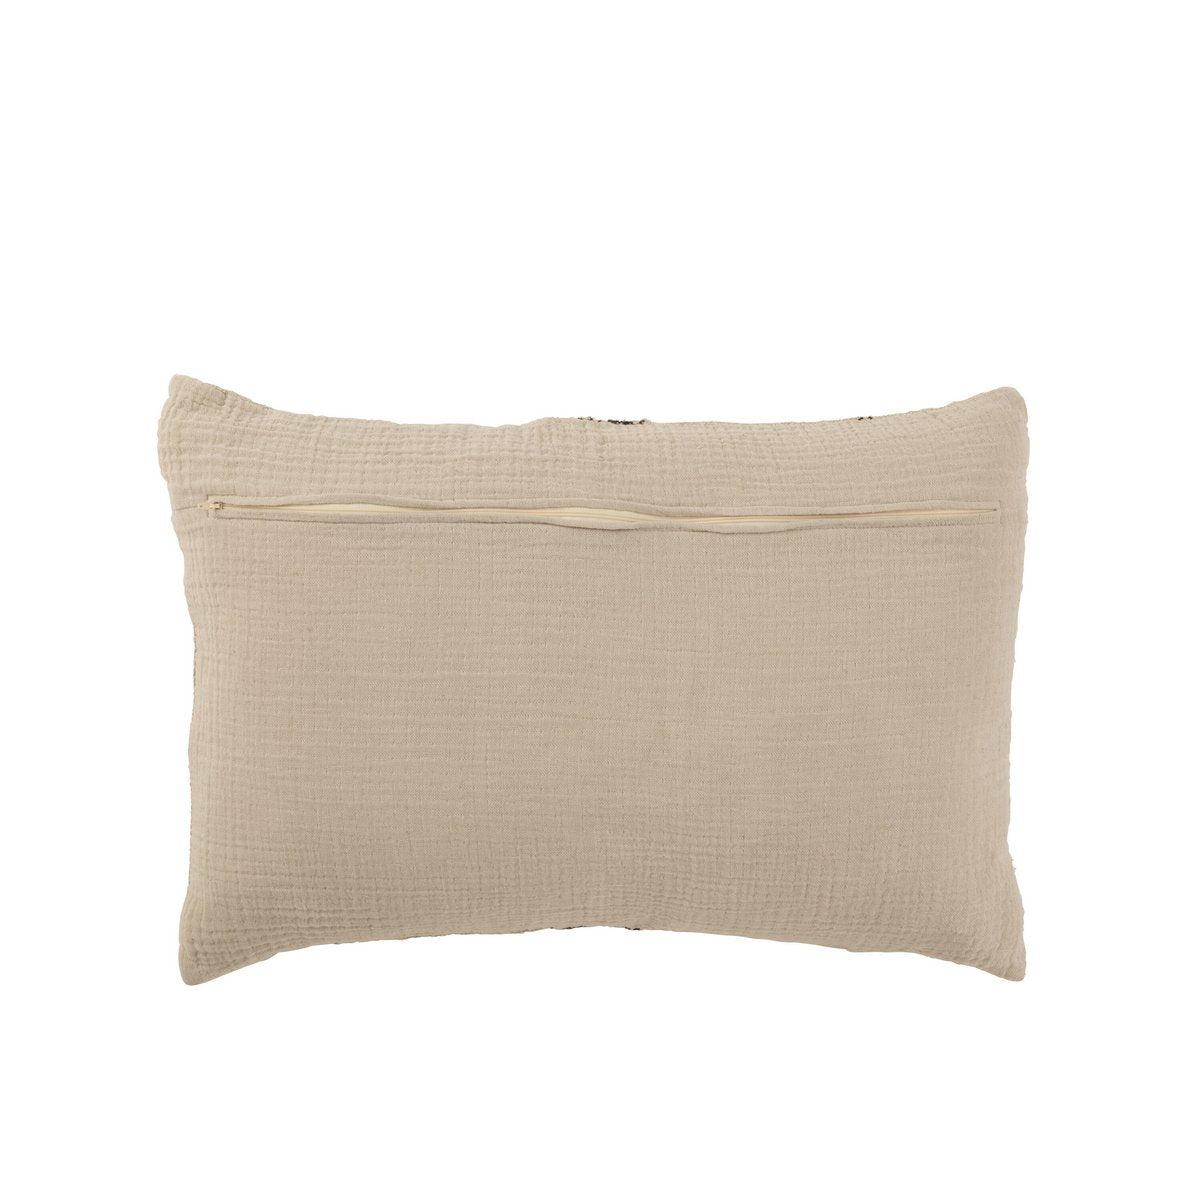 Cushion with stripes - linen, beige black - long